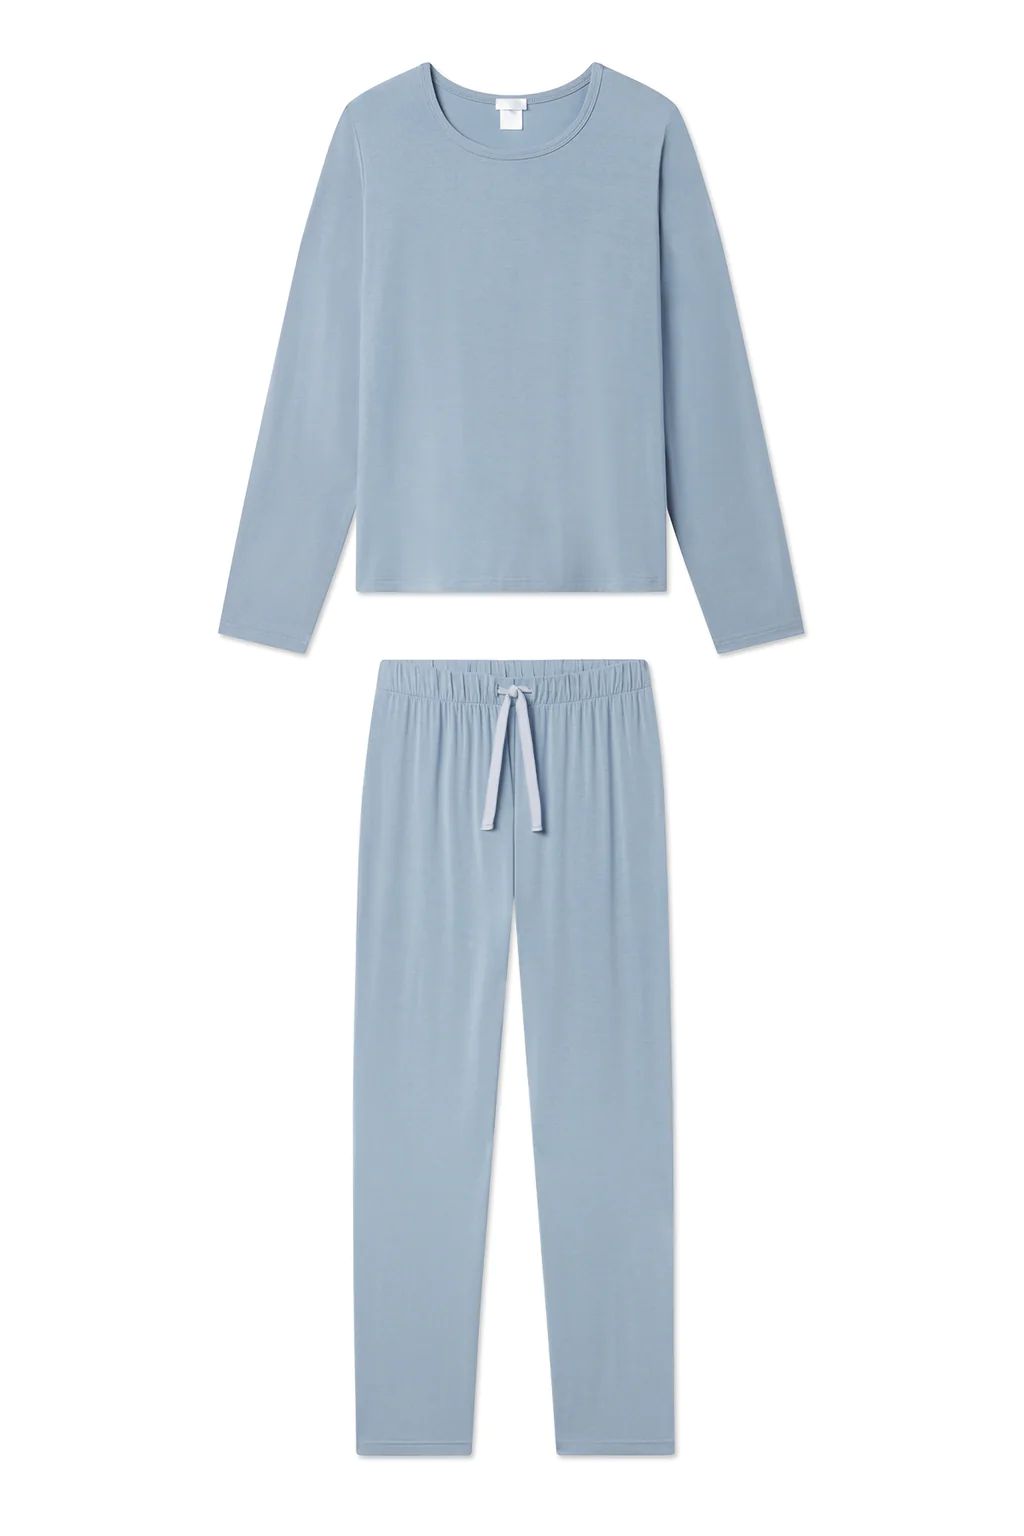 DreamKnit Ribbon Long-Long Set in Dusty Blue | Lake Pajamas